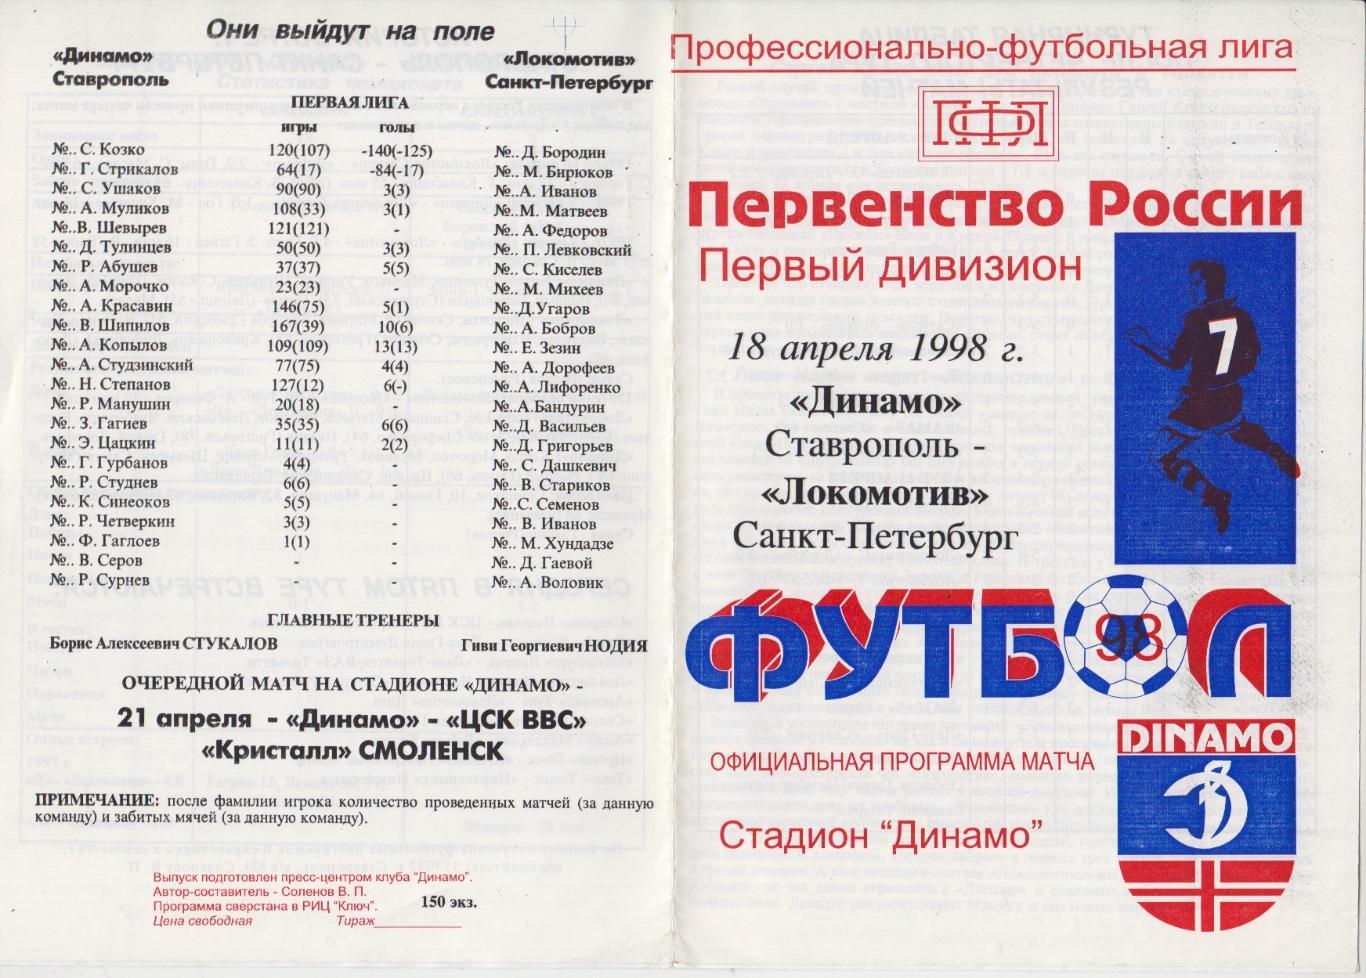 Динамо(Ставрополь) - Локомотив(Санкт-Петербург) - 1998